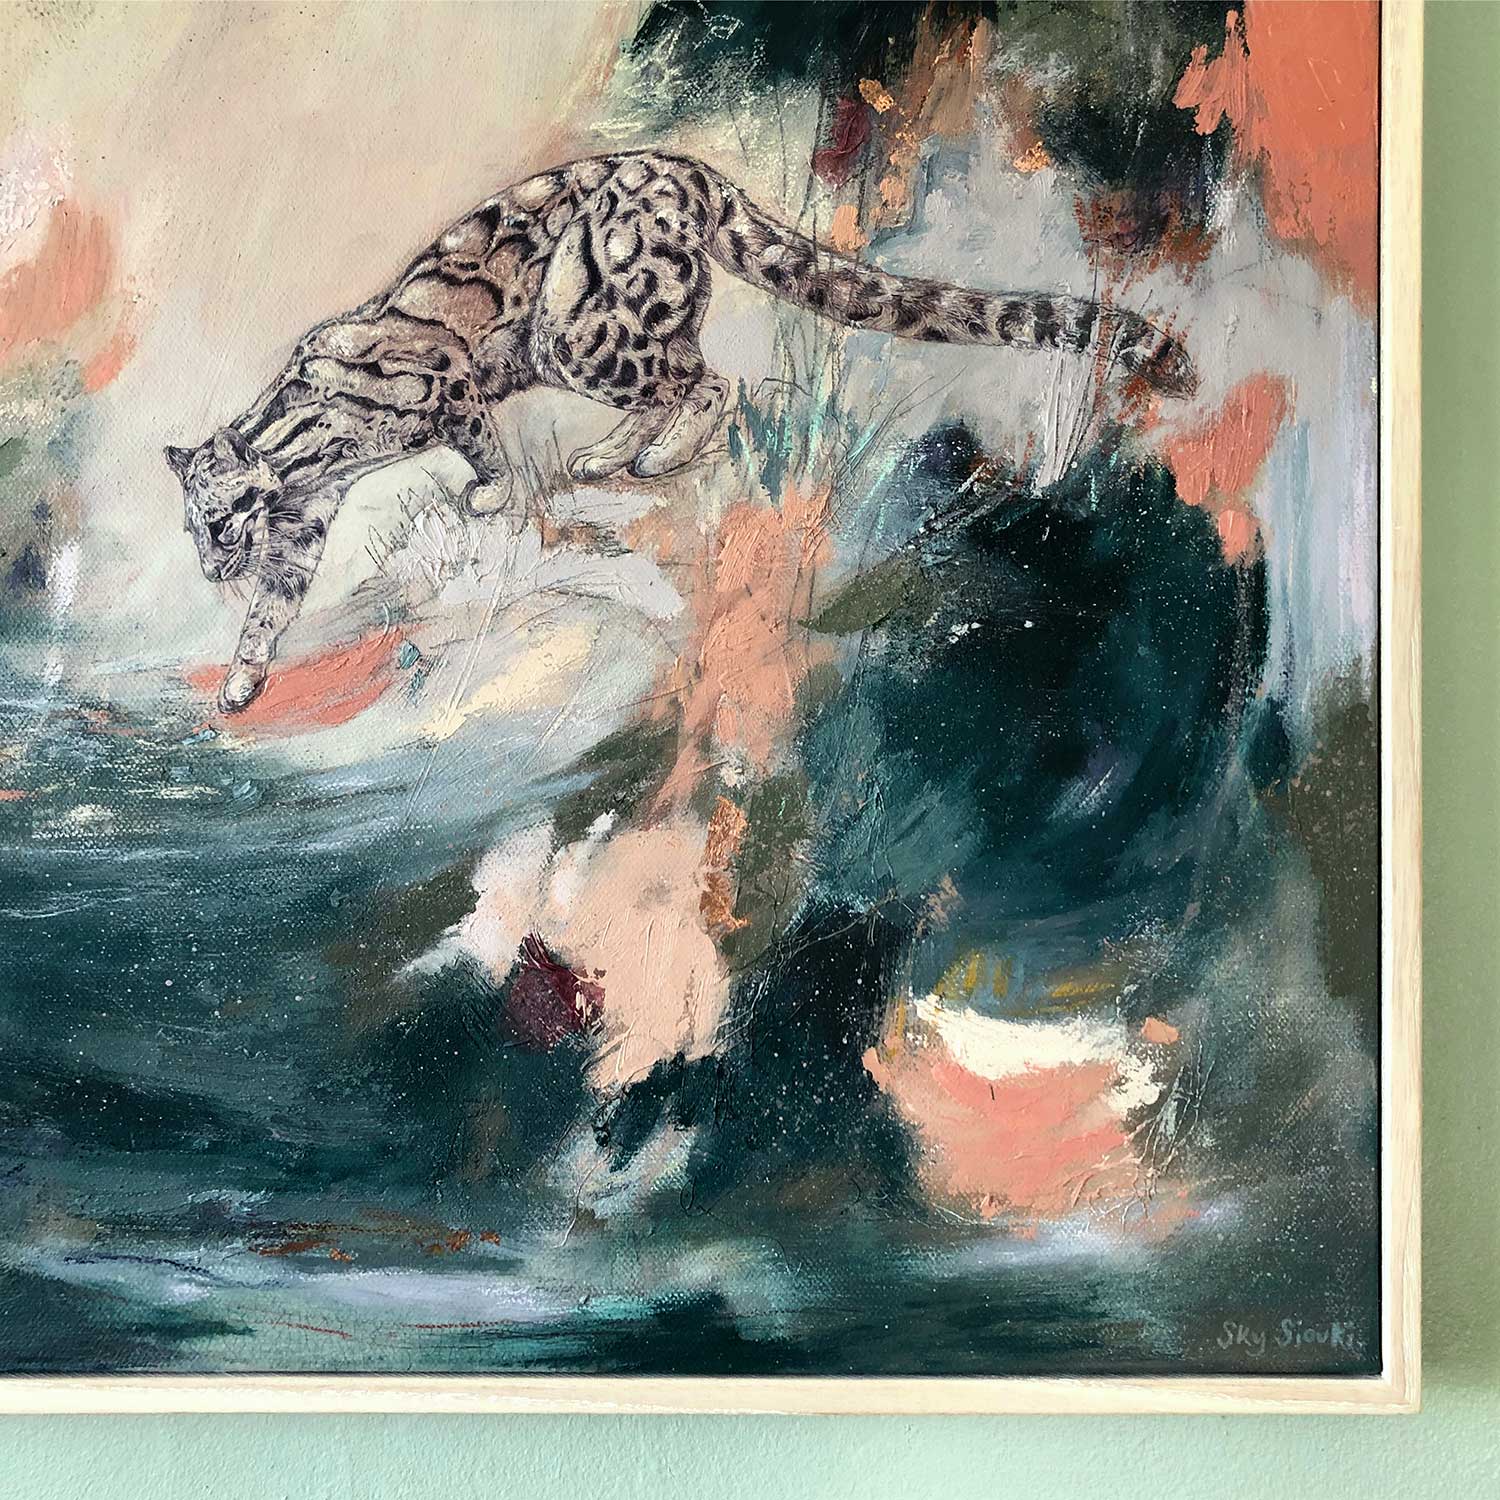 Wild-Painting-Leopard-Sky-Siouki